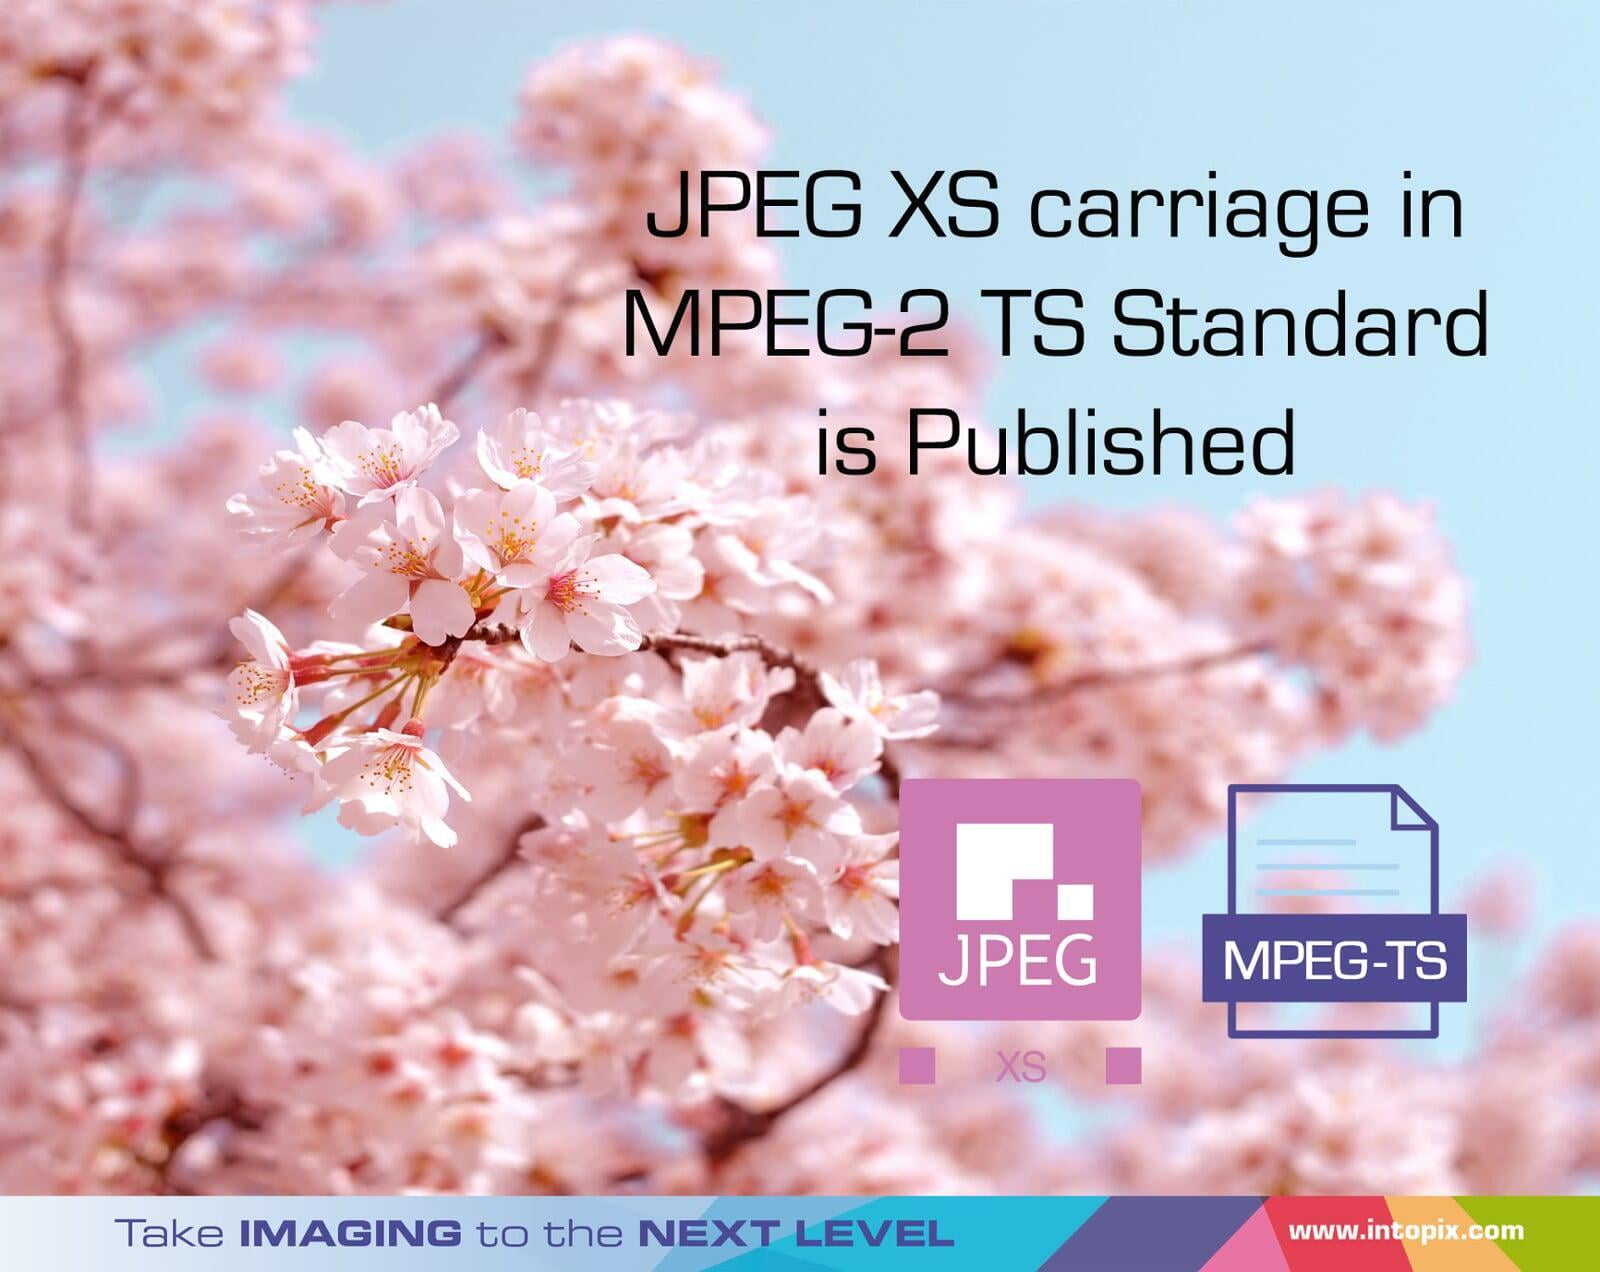 MPEG-2 TS 표준의 JPEG XS 캐리지가 게시됨